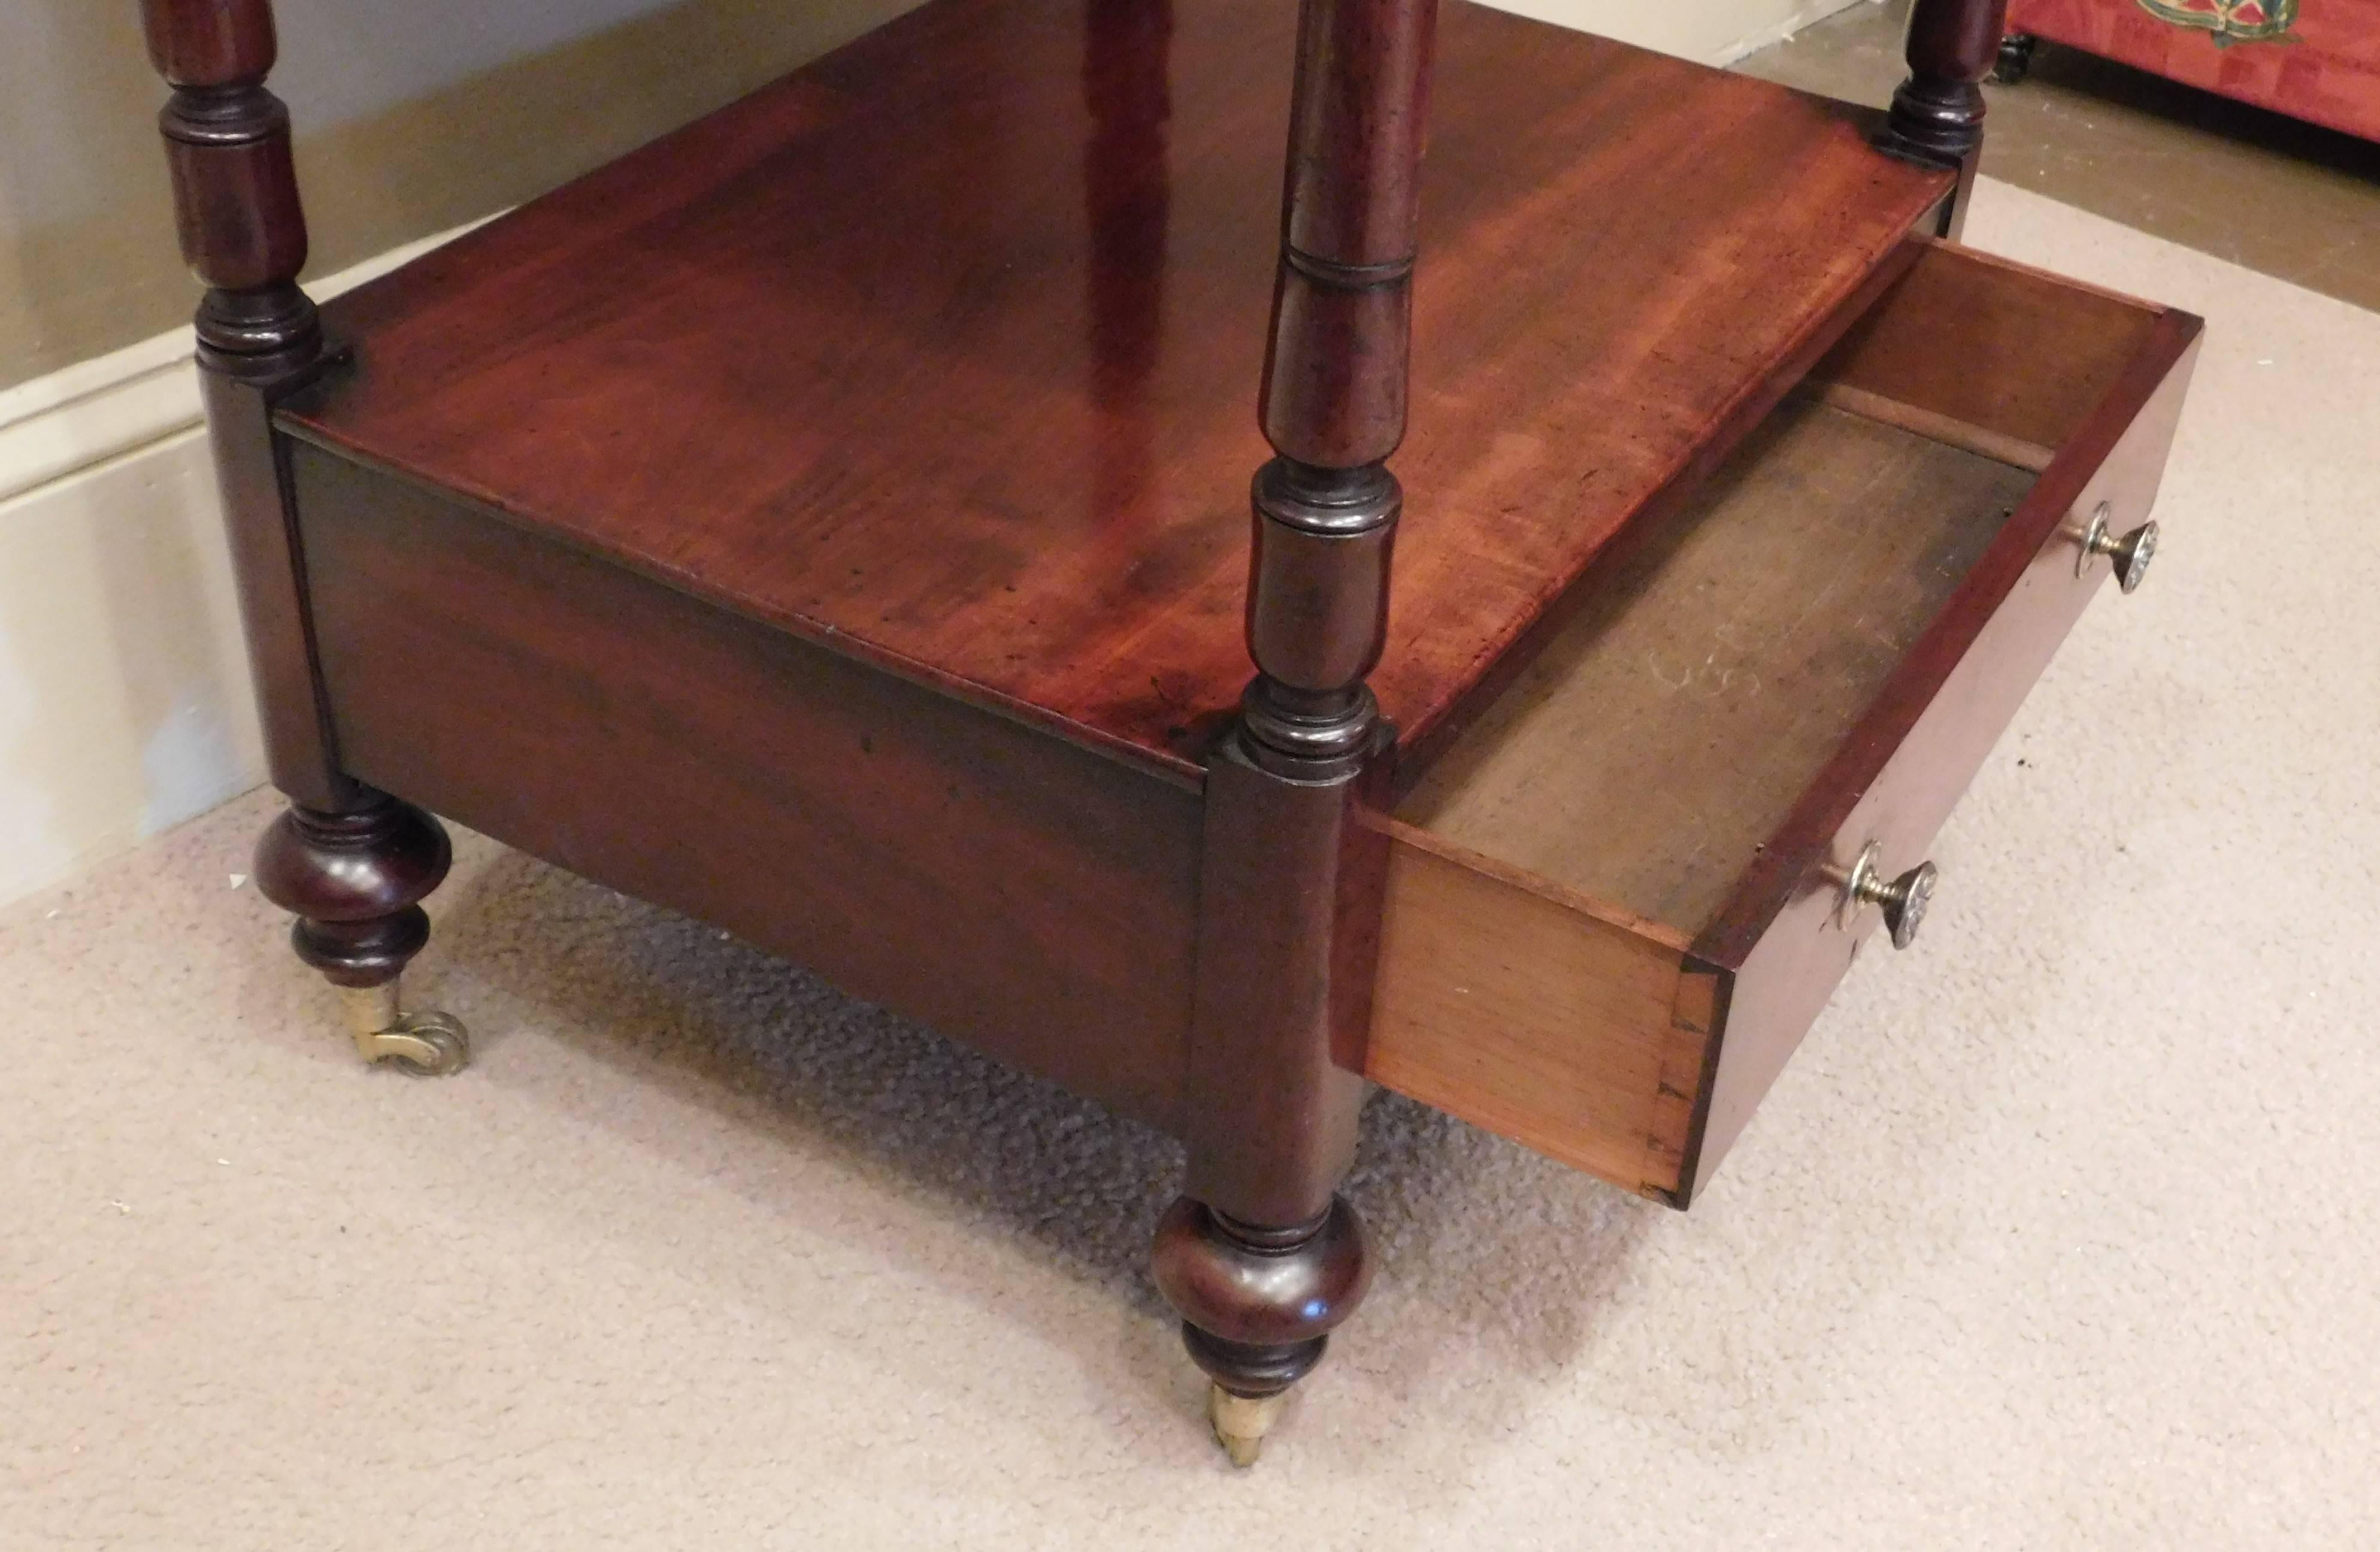 Mahogany with oak secondary wood French polish one-drawer casters appear original bottom shelf height: 12"; top shelf height: 27.75"; total height at corners: 28.5".

   